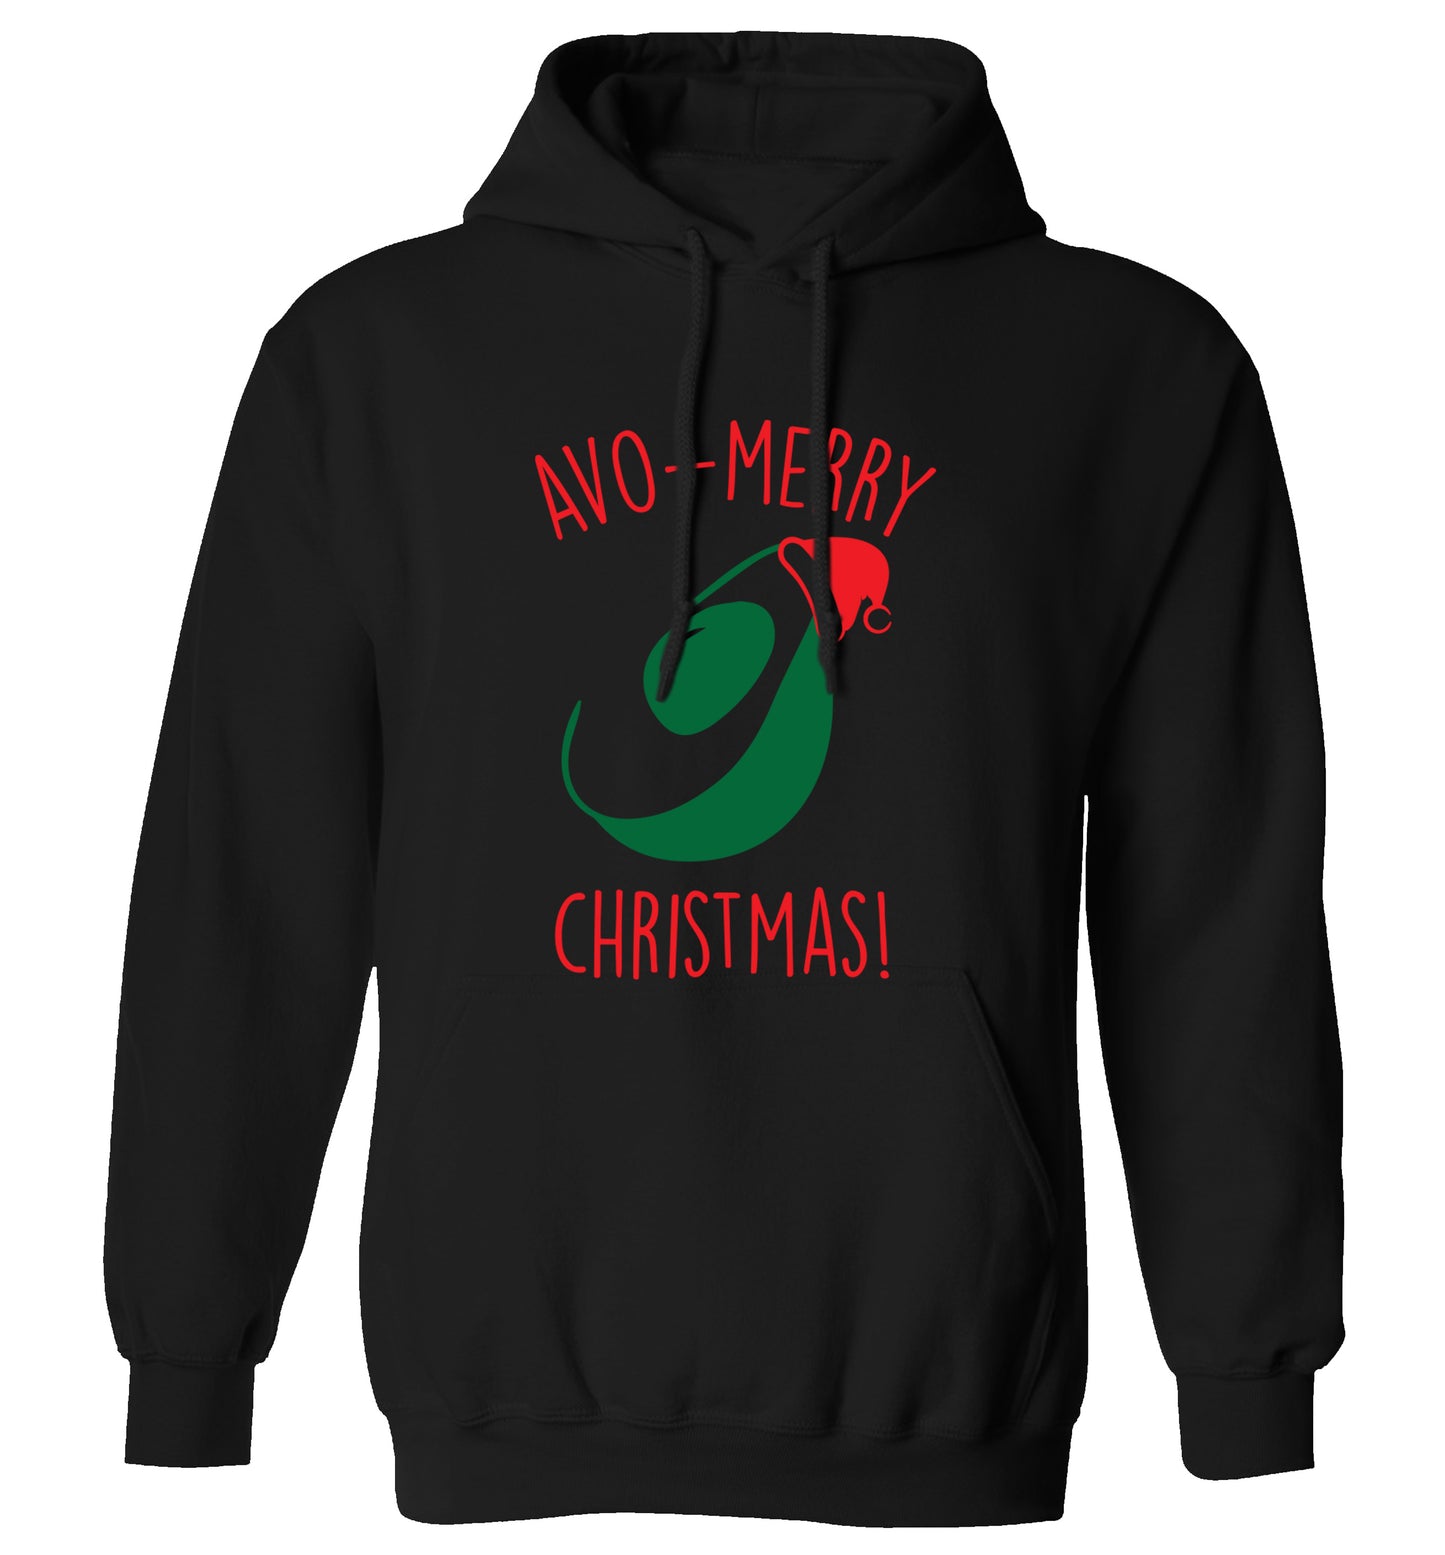 Avo-Merry Christmas adults unisex black hoodie 2XL